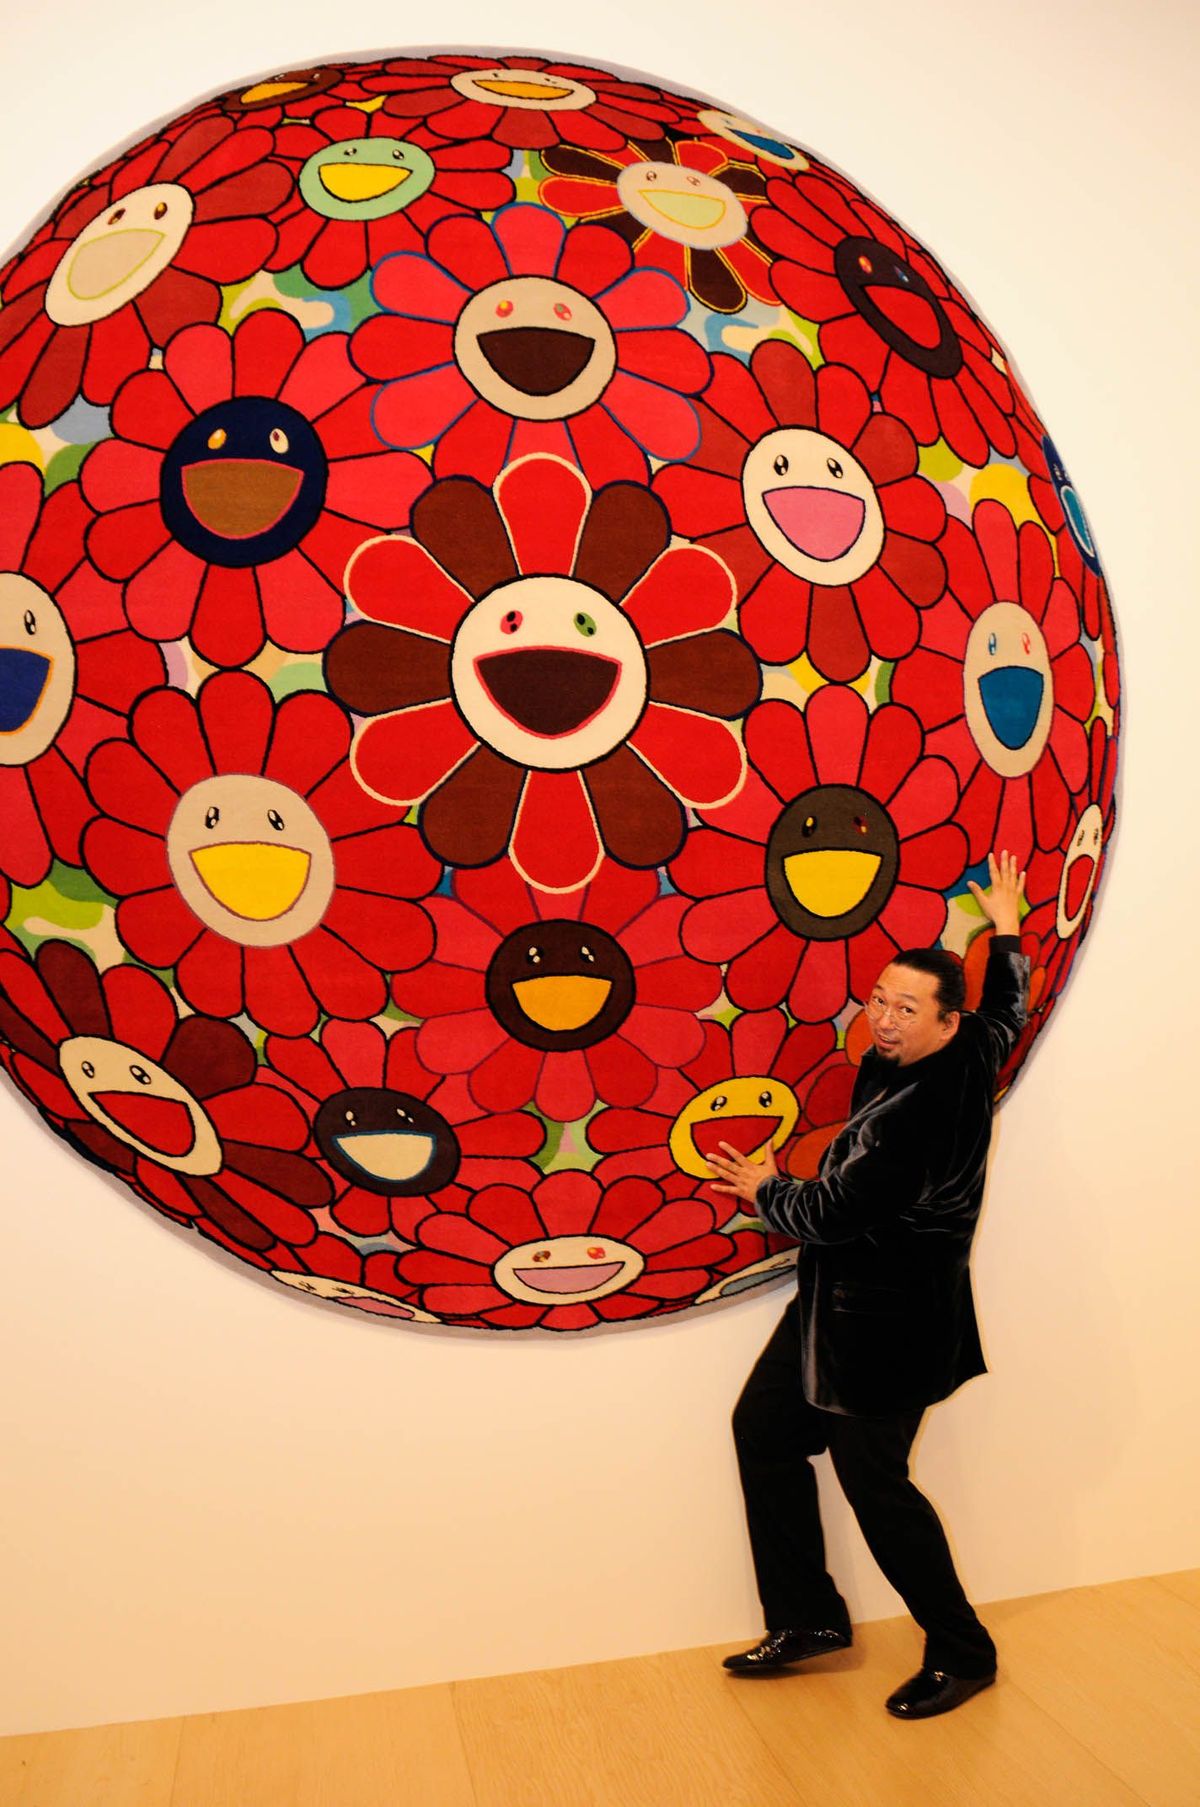 Takashi Murakami's Artistic Voyage into Rug Design with Louis Vuitton"